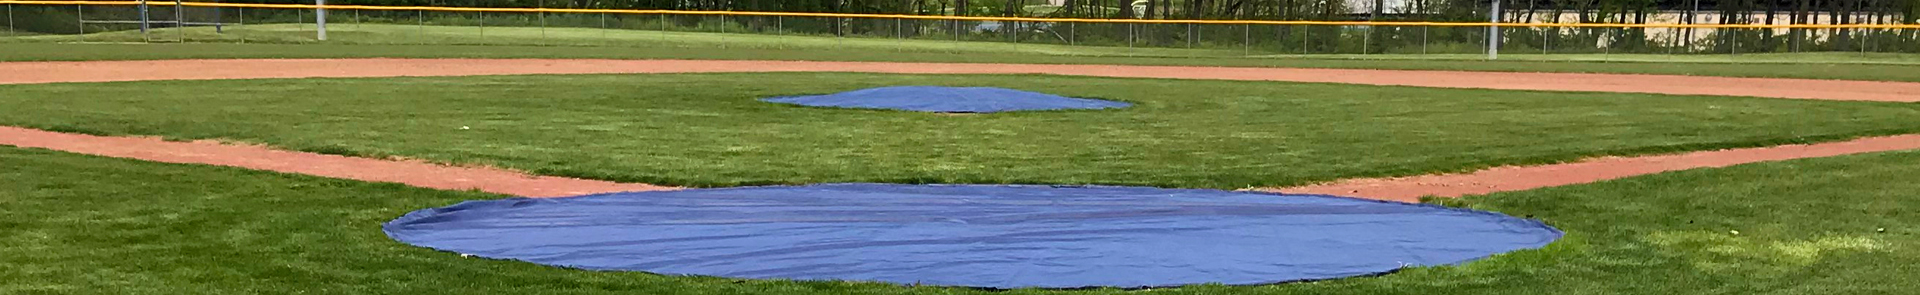 Baseball Mound Covers